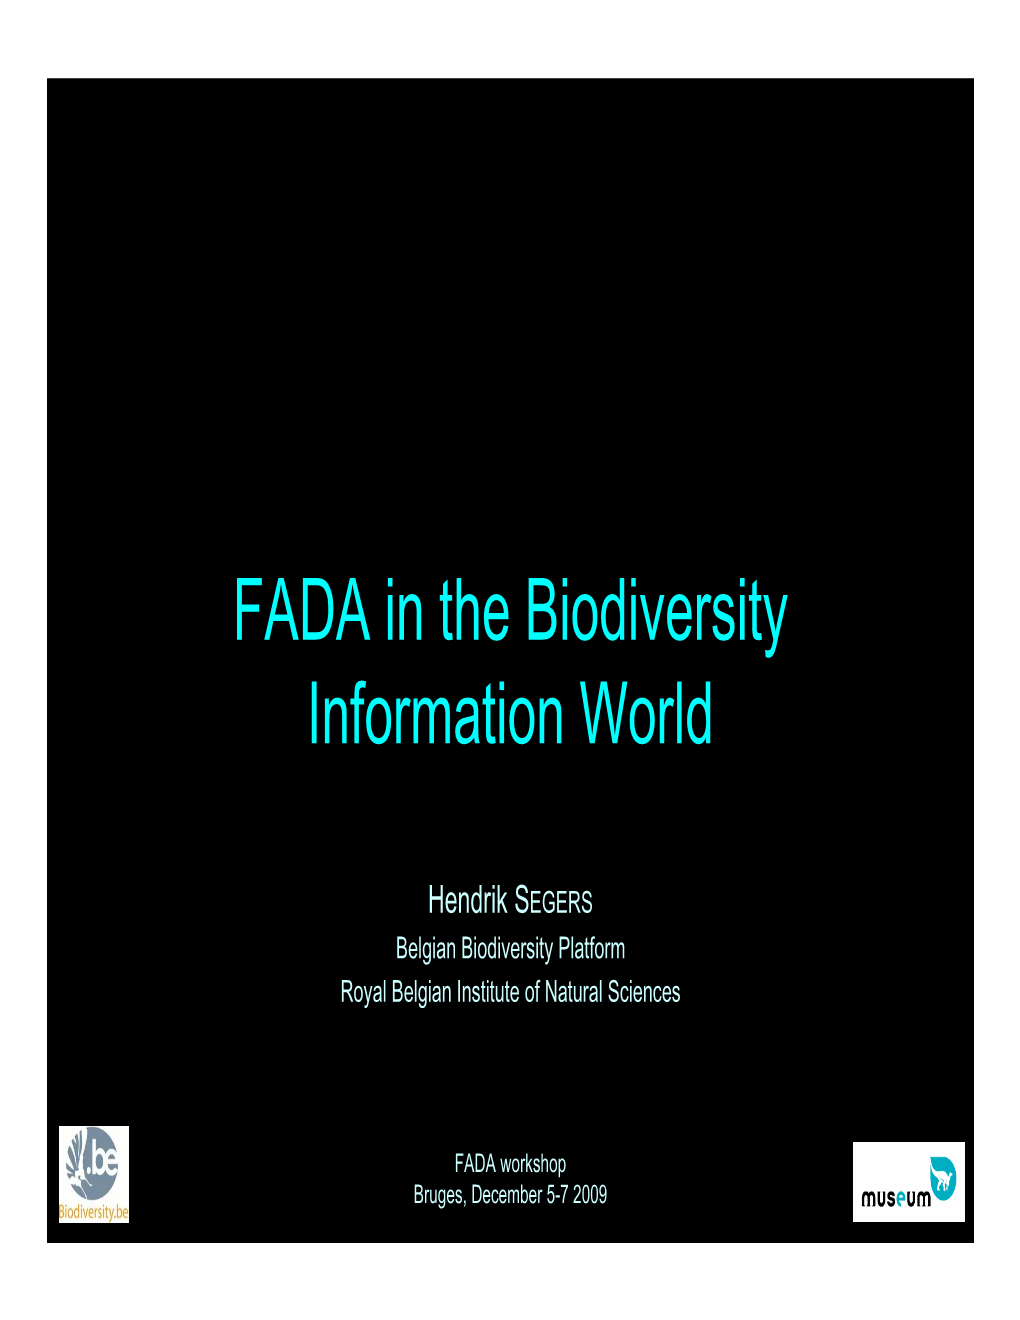 FADA in the Biodiversity Information World